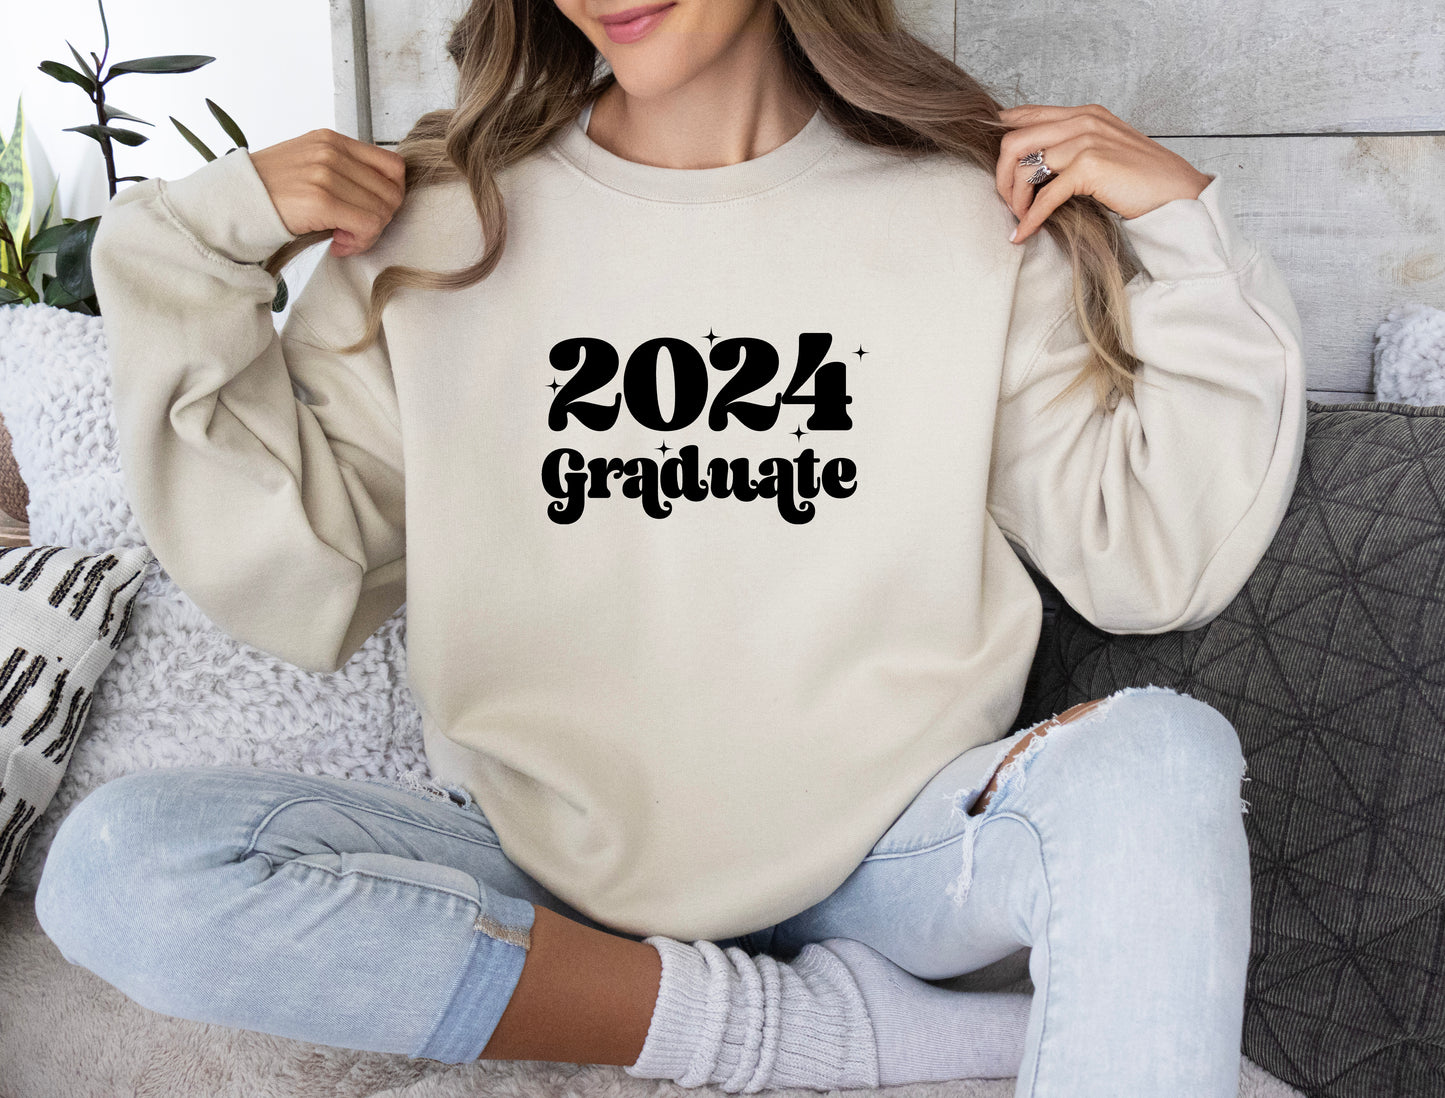 Grad 2024 Comfy Sand Color Crewneck Sweatshirt in Retro Font